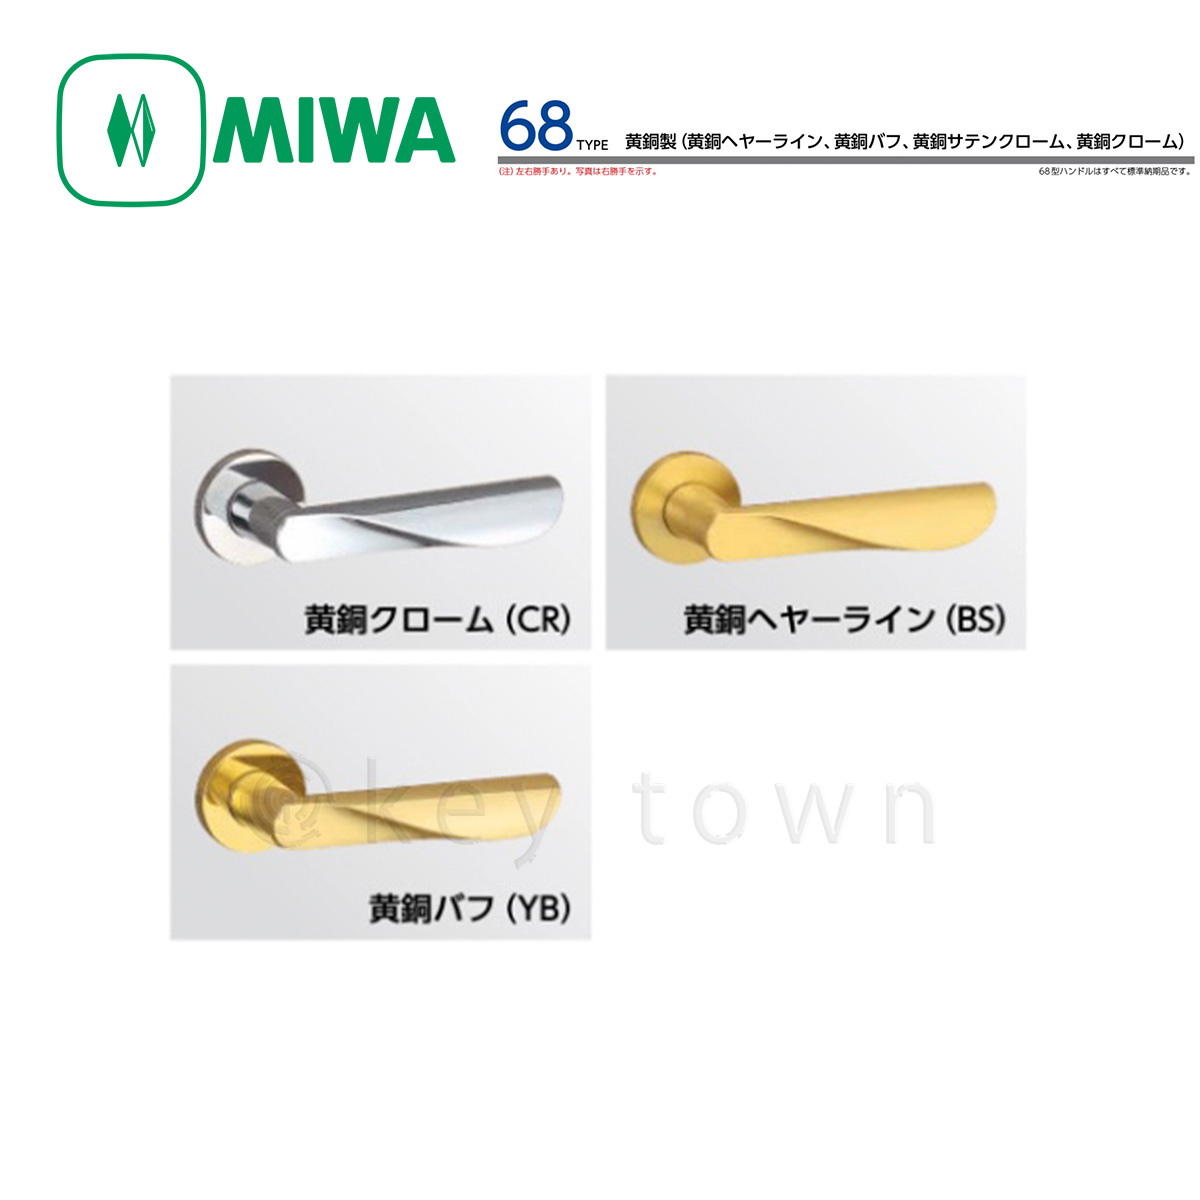 MIWA 【美和ロック】 ハンドル [MIWA-LA-68] 交換用 黄銅製[MIWALA68 